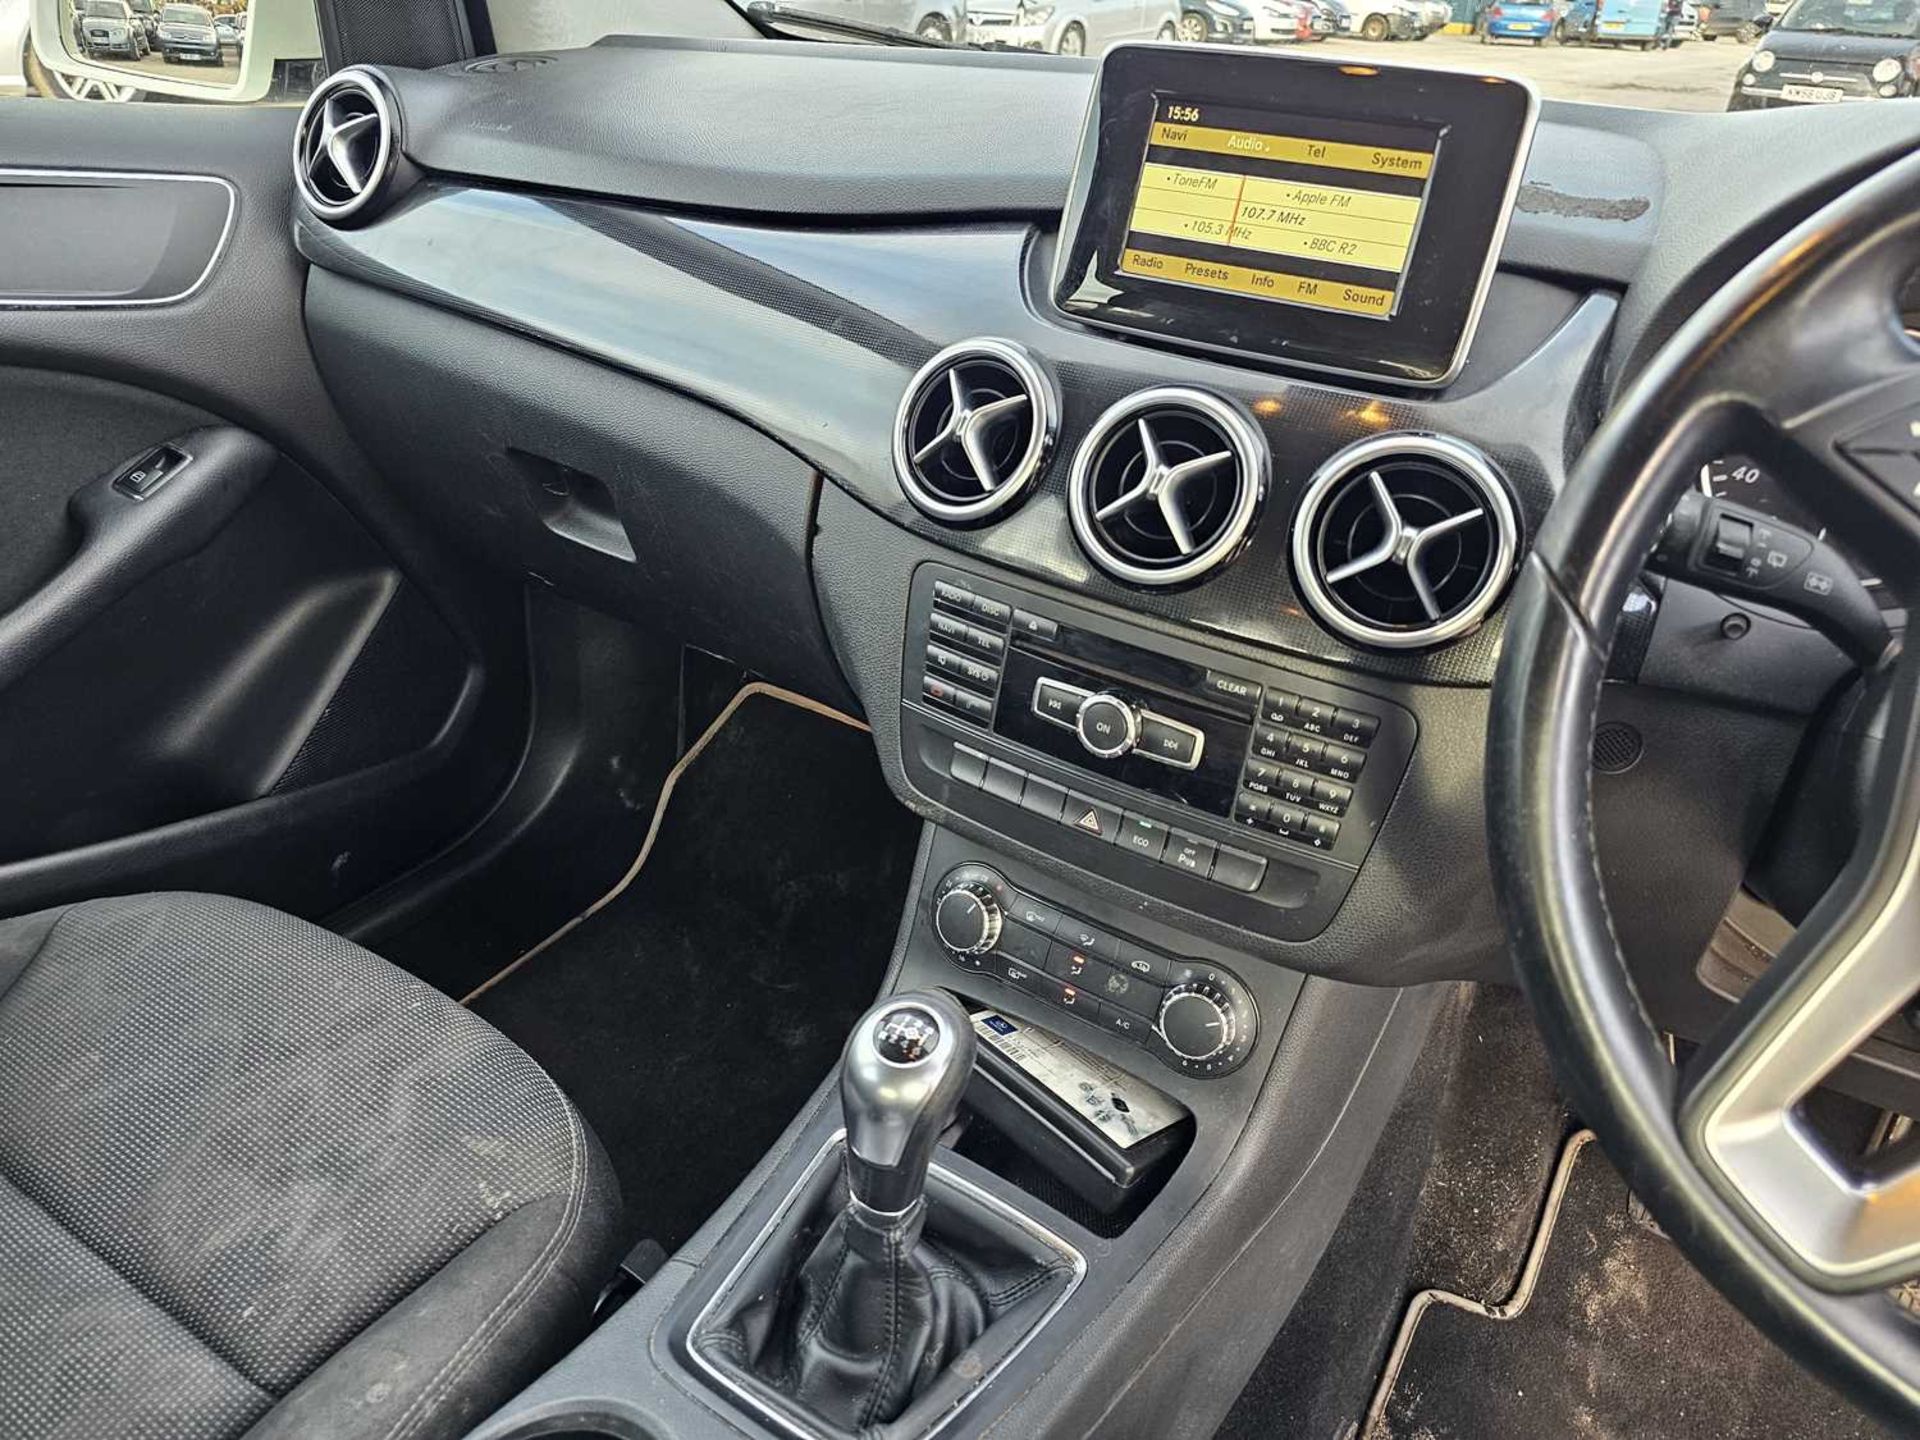 2012 Mercedes B180 CDi, 6 Speed, Parking Sensors, Bluetooth, Cruise Control, A/C (Reg. Docs. Availab - Image 17 of 28